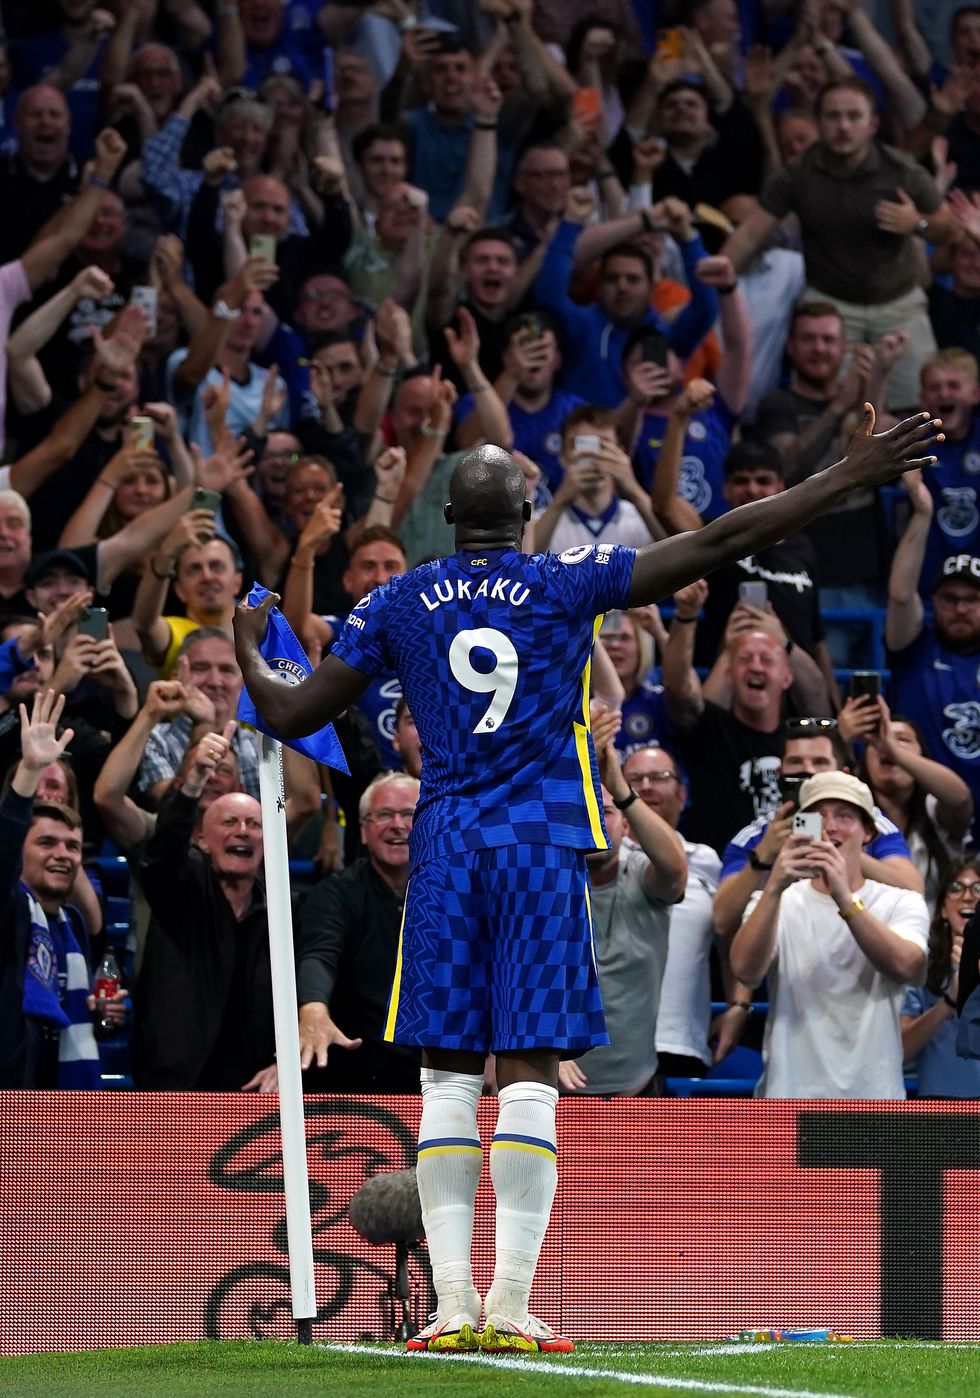 Chelsea's Romelu Lukaku celebrates scoring their side's third goal of the game during the match against Aston Villa at Stamford Bridge.